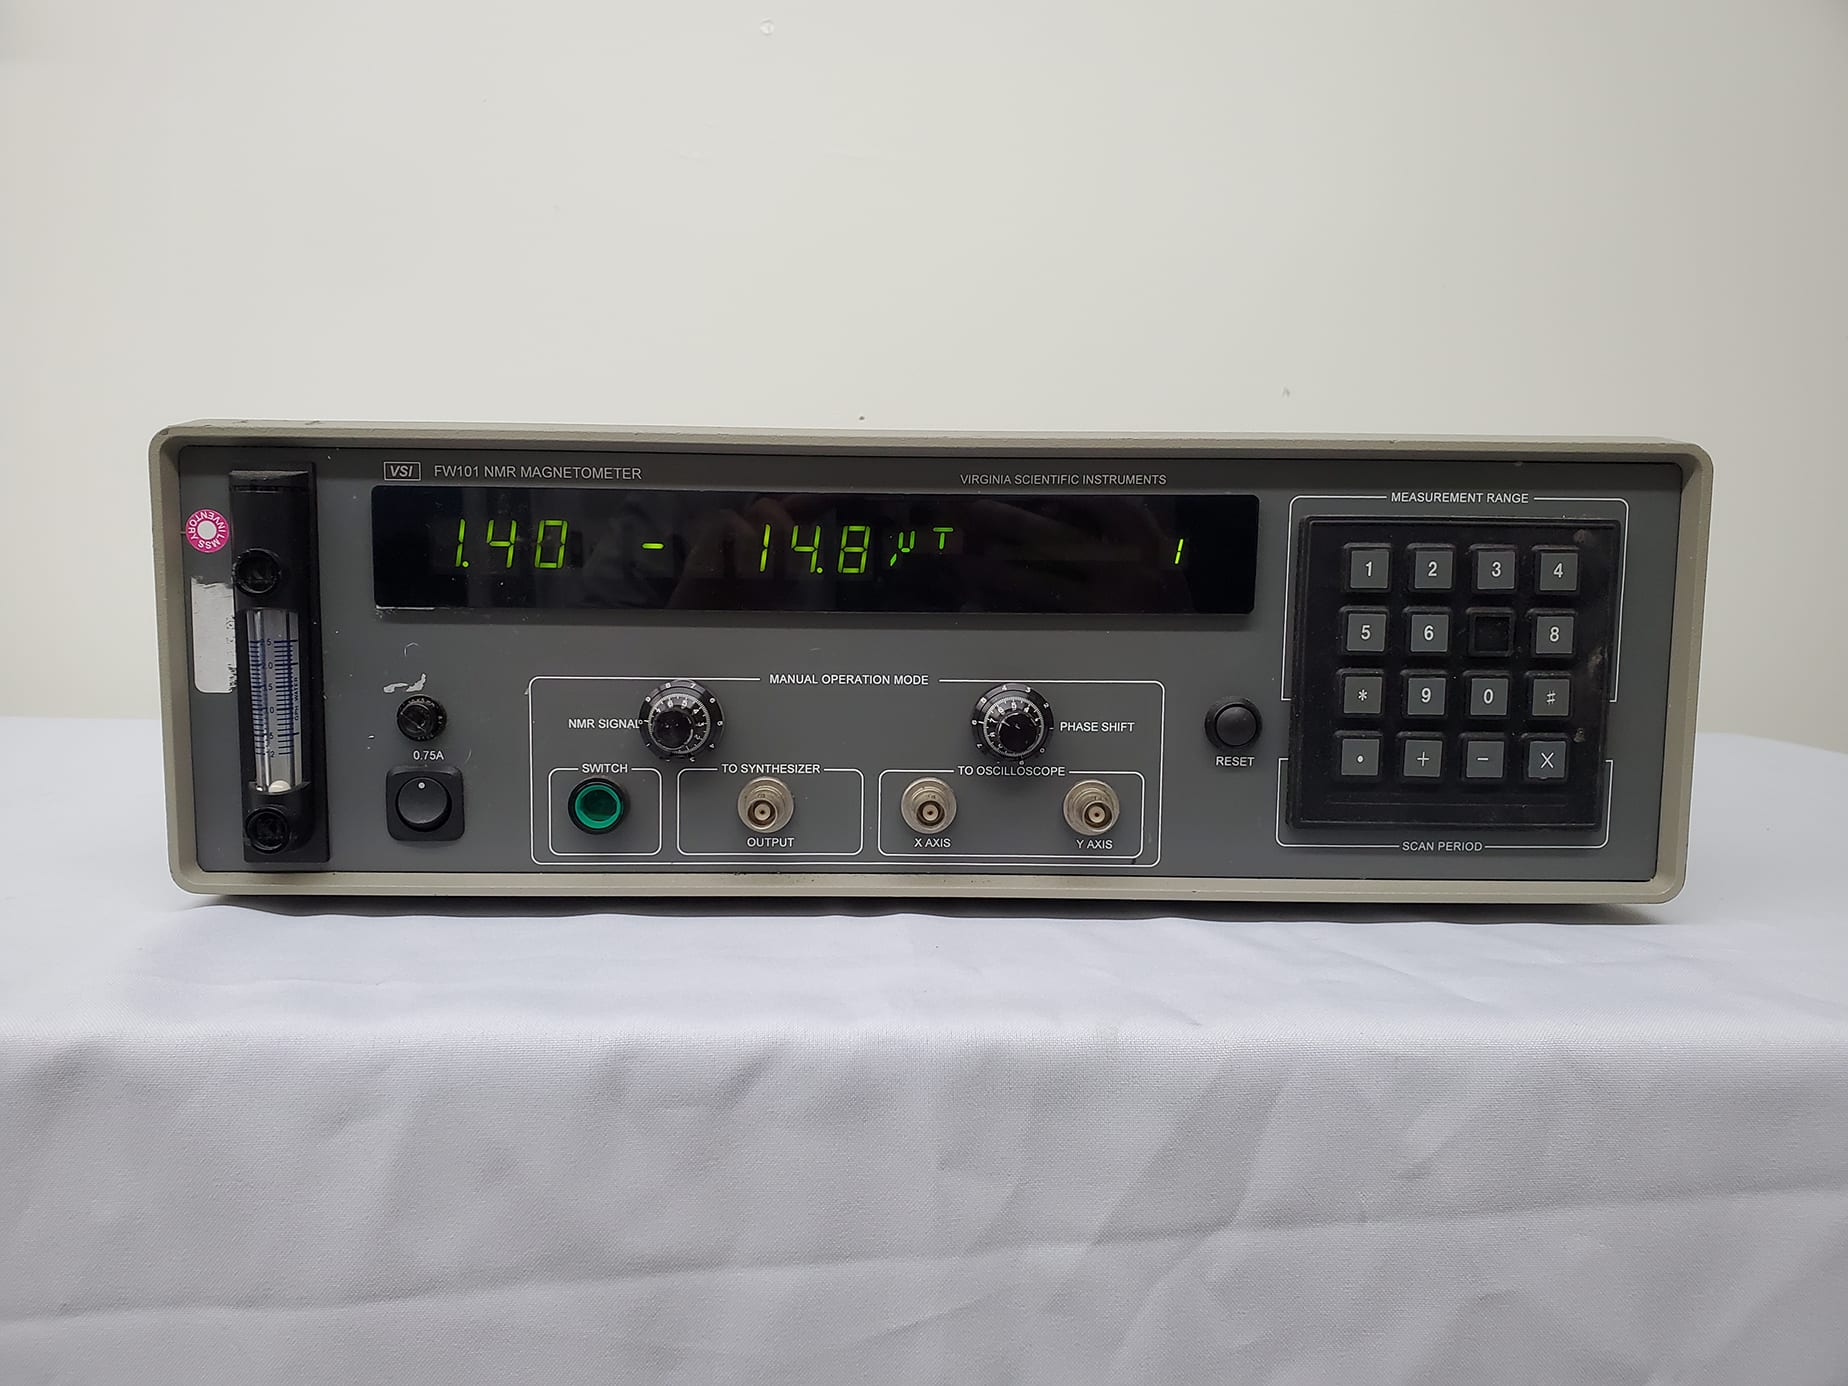 Virgina Scientific Instruments (VSI)-FW 101-NMR Magnetometer-58850 For Sale